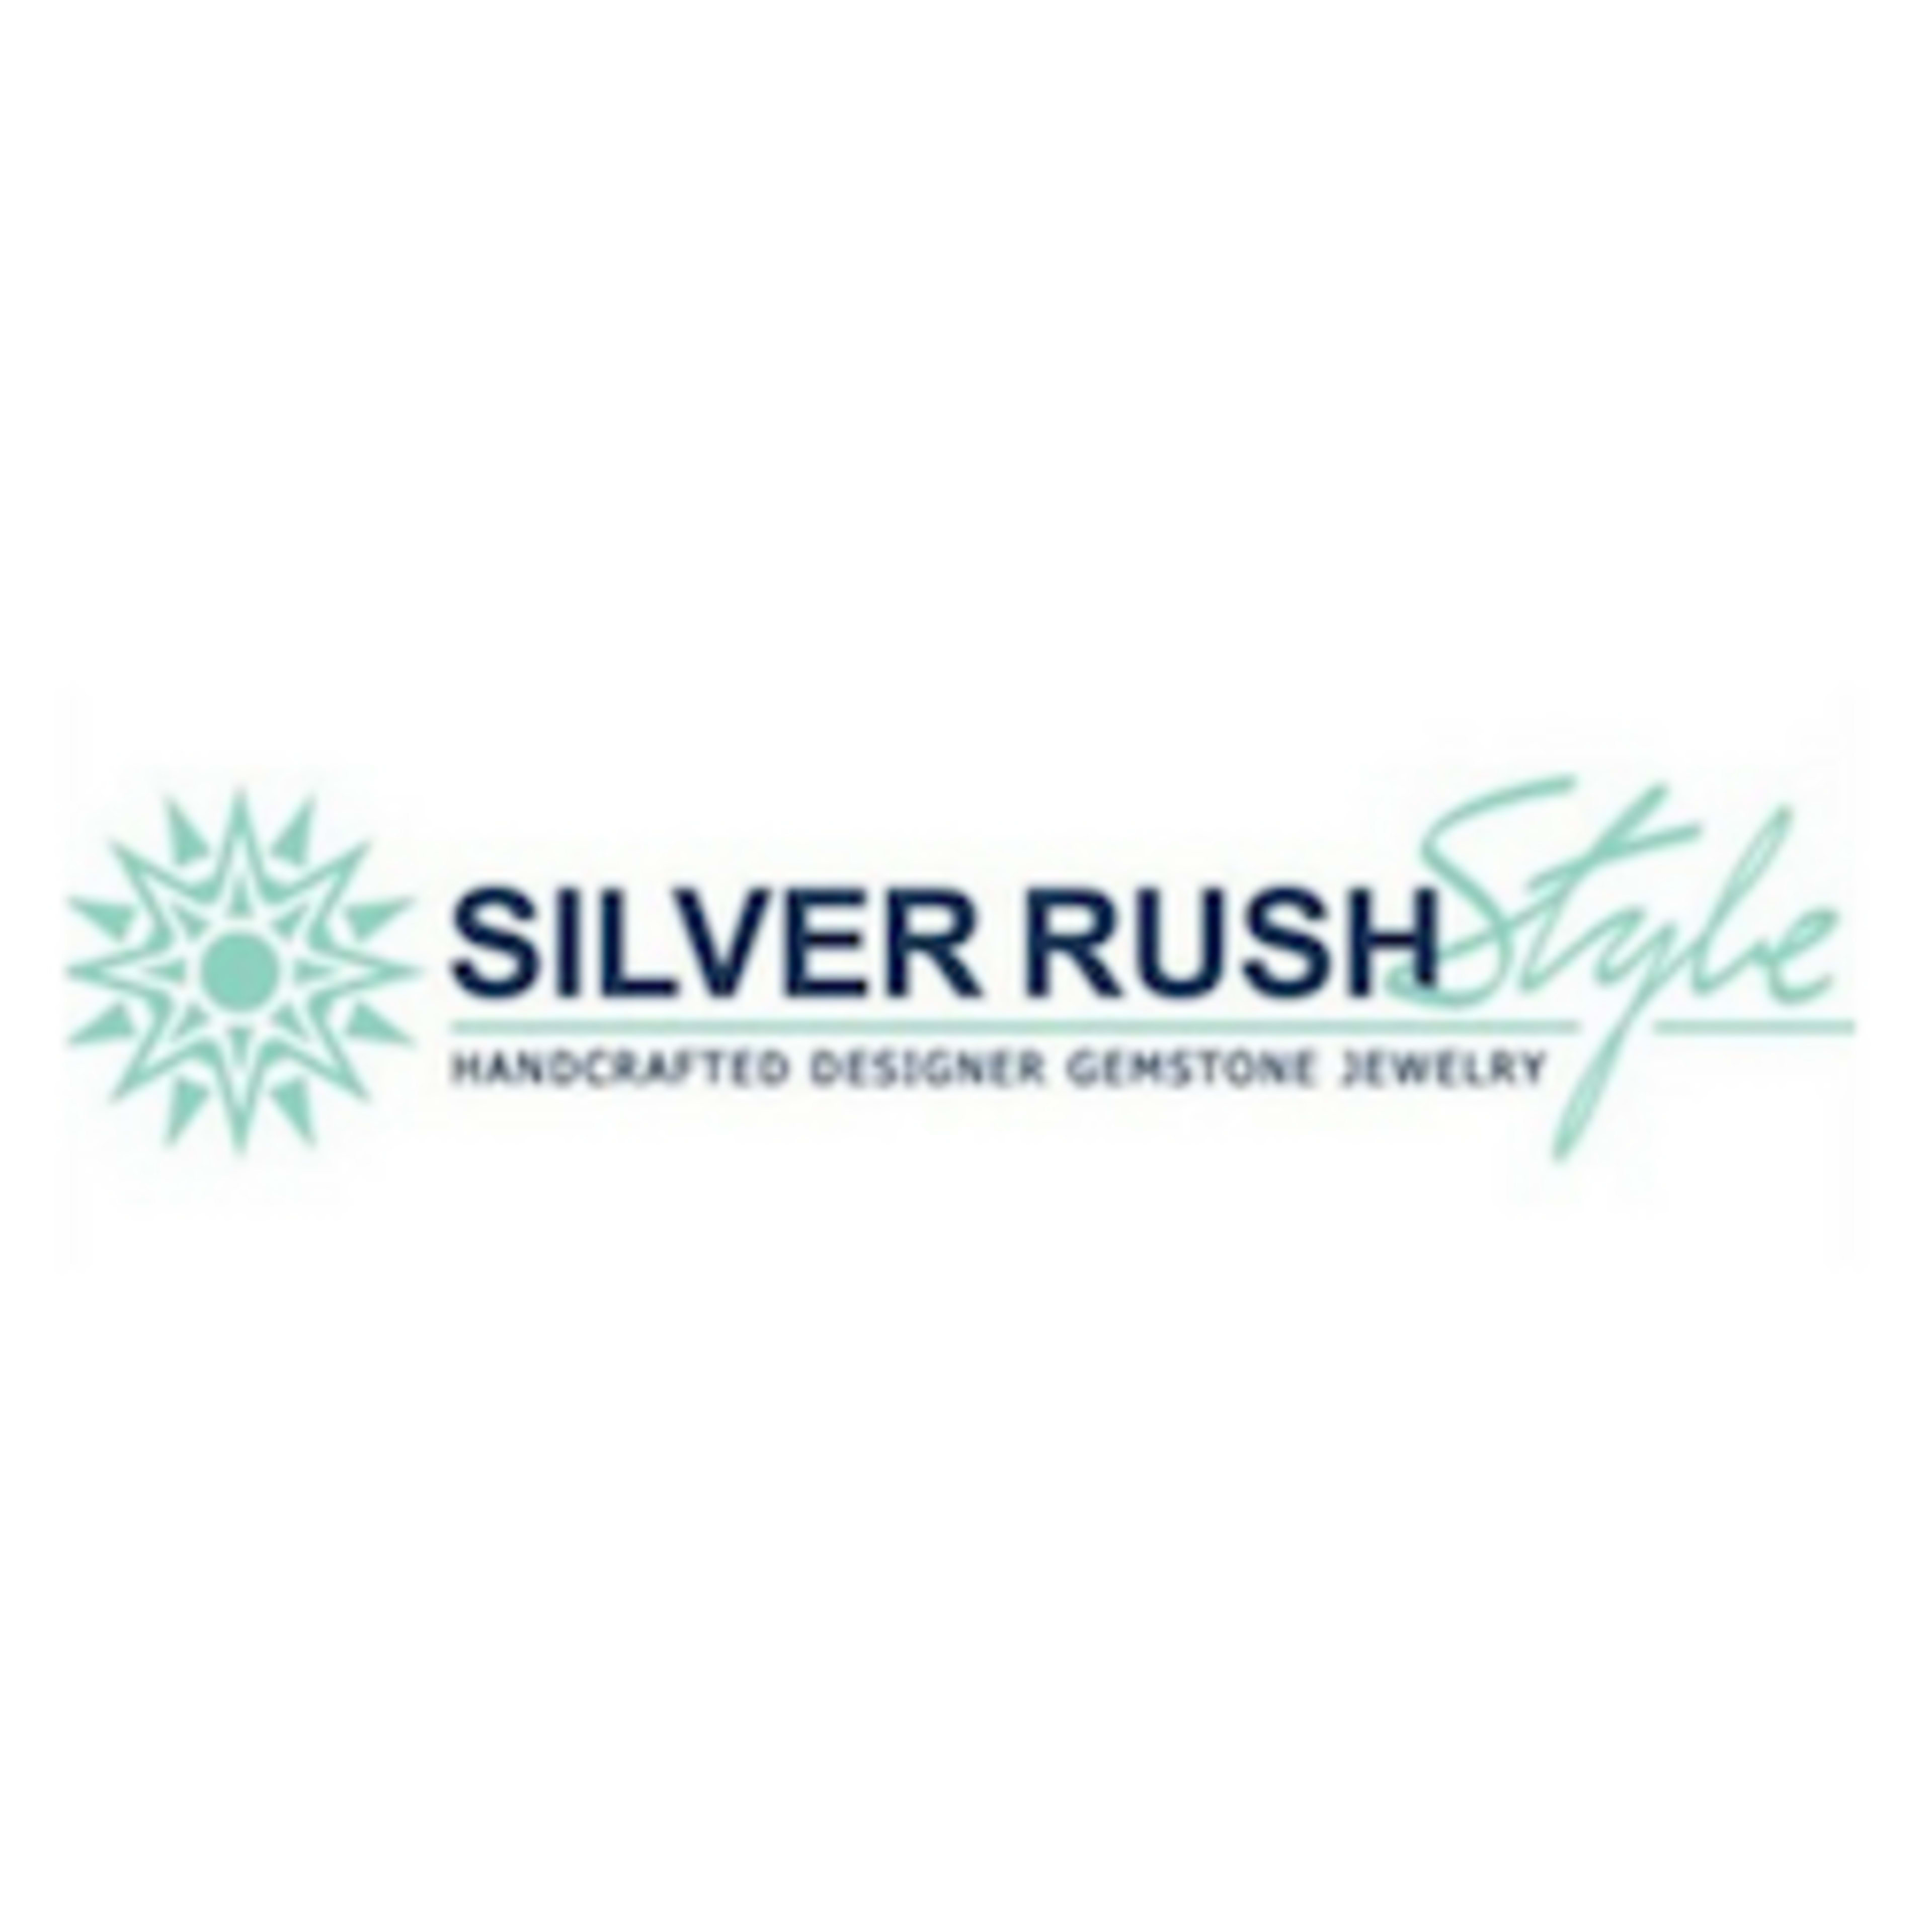 SilverRush StyleCode